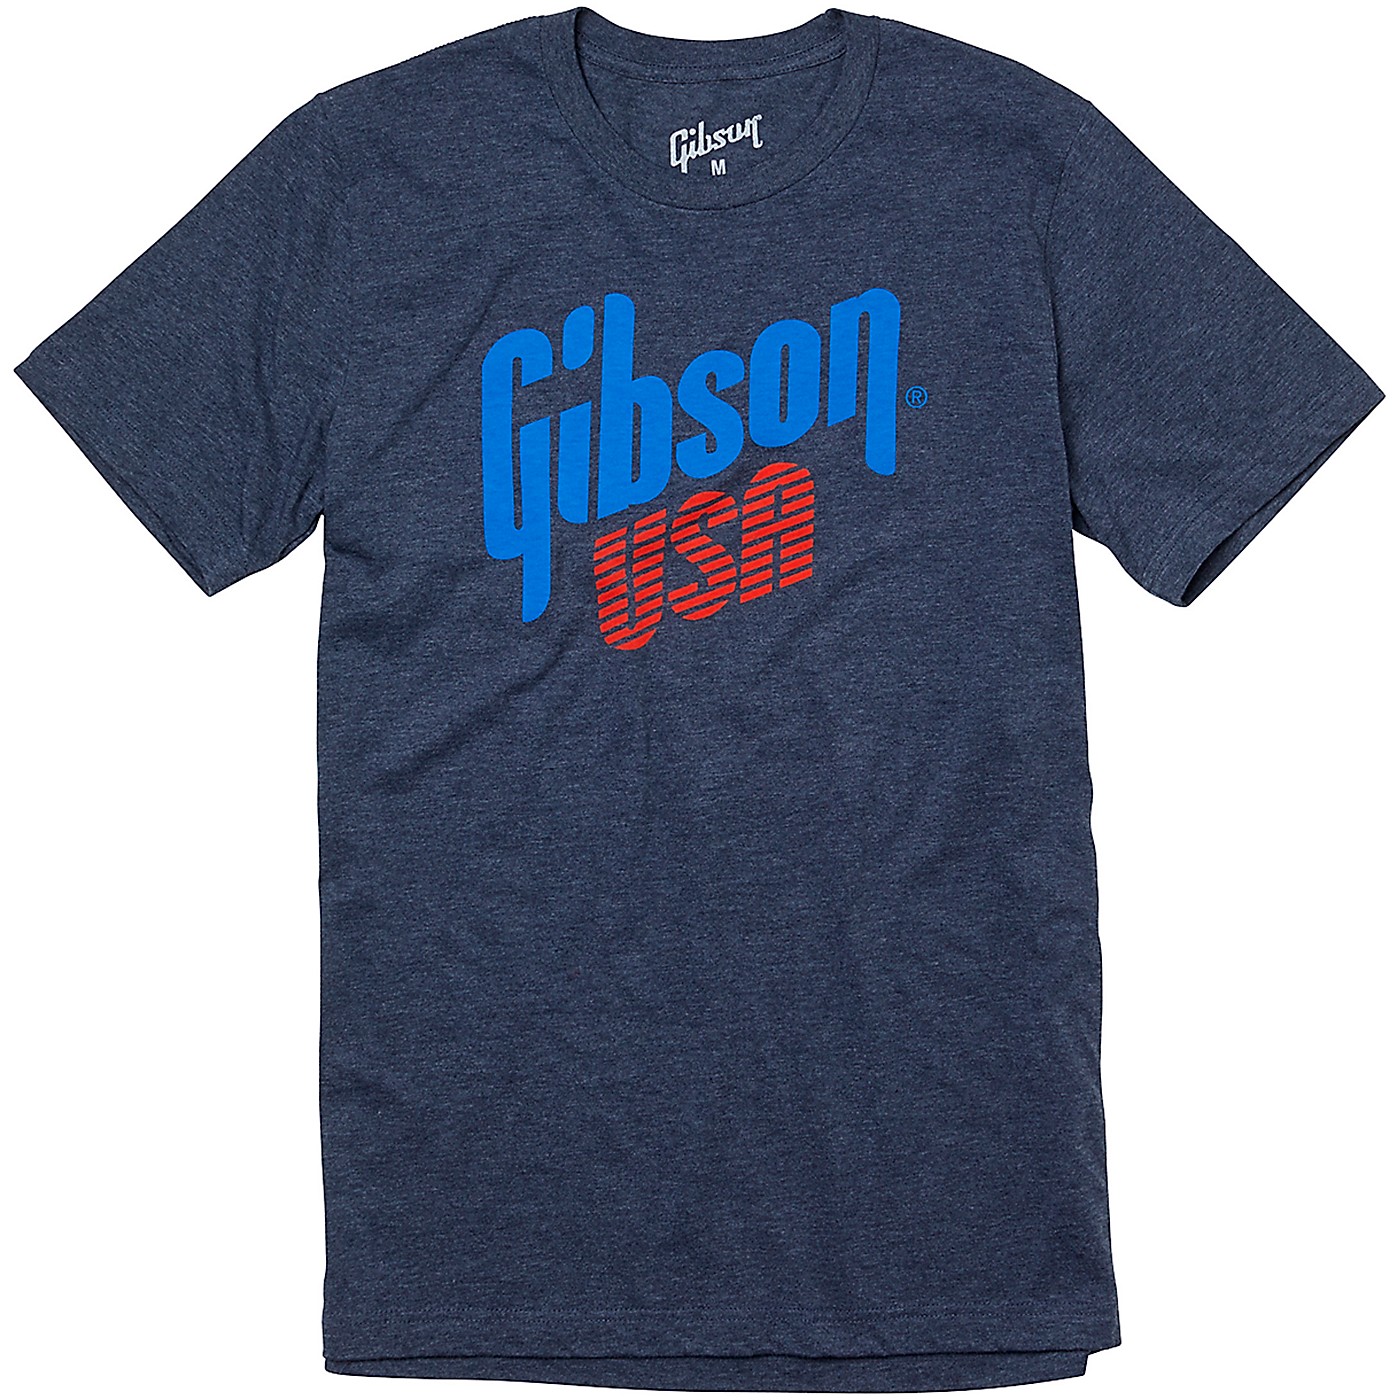 Gibson Gibson USA T-Shirt thumbnail